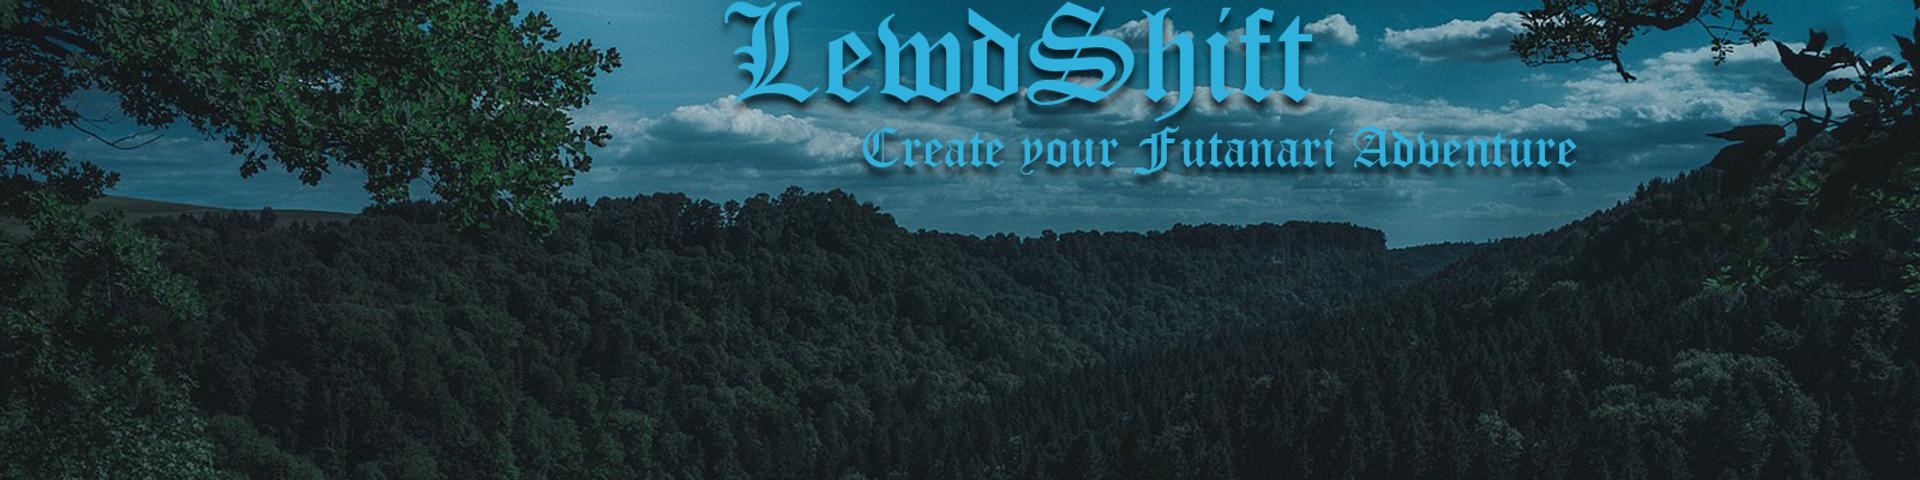 LewdShift Version 0.1 Win/Mac by LewdShift Team